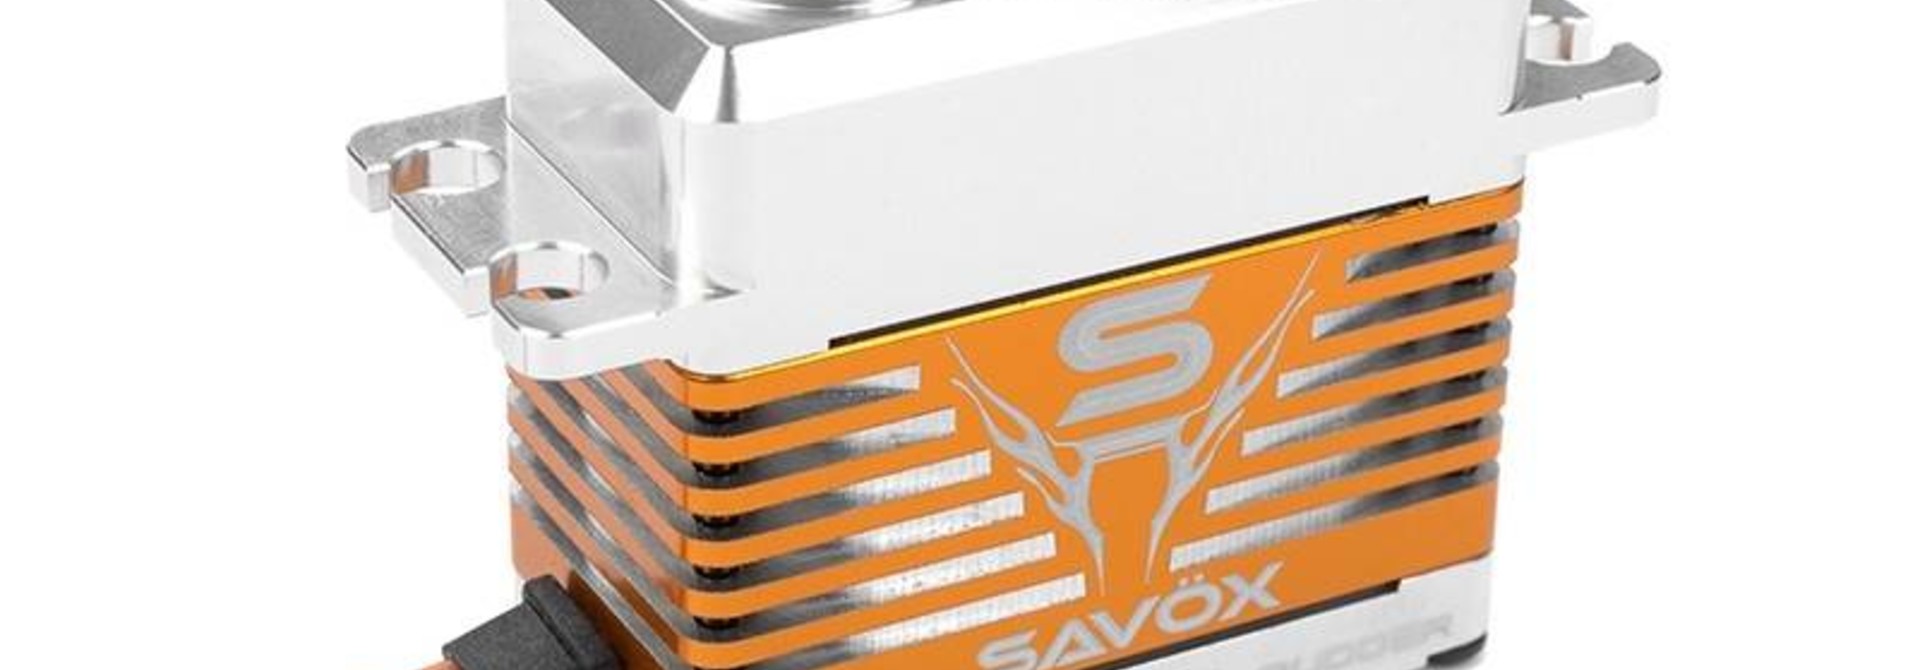 Savox - Servo - SB-2283MG - Digital - High Voltage - Brushless Motor - Metaal tandwielen